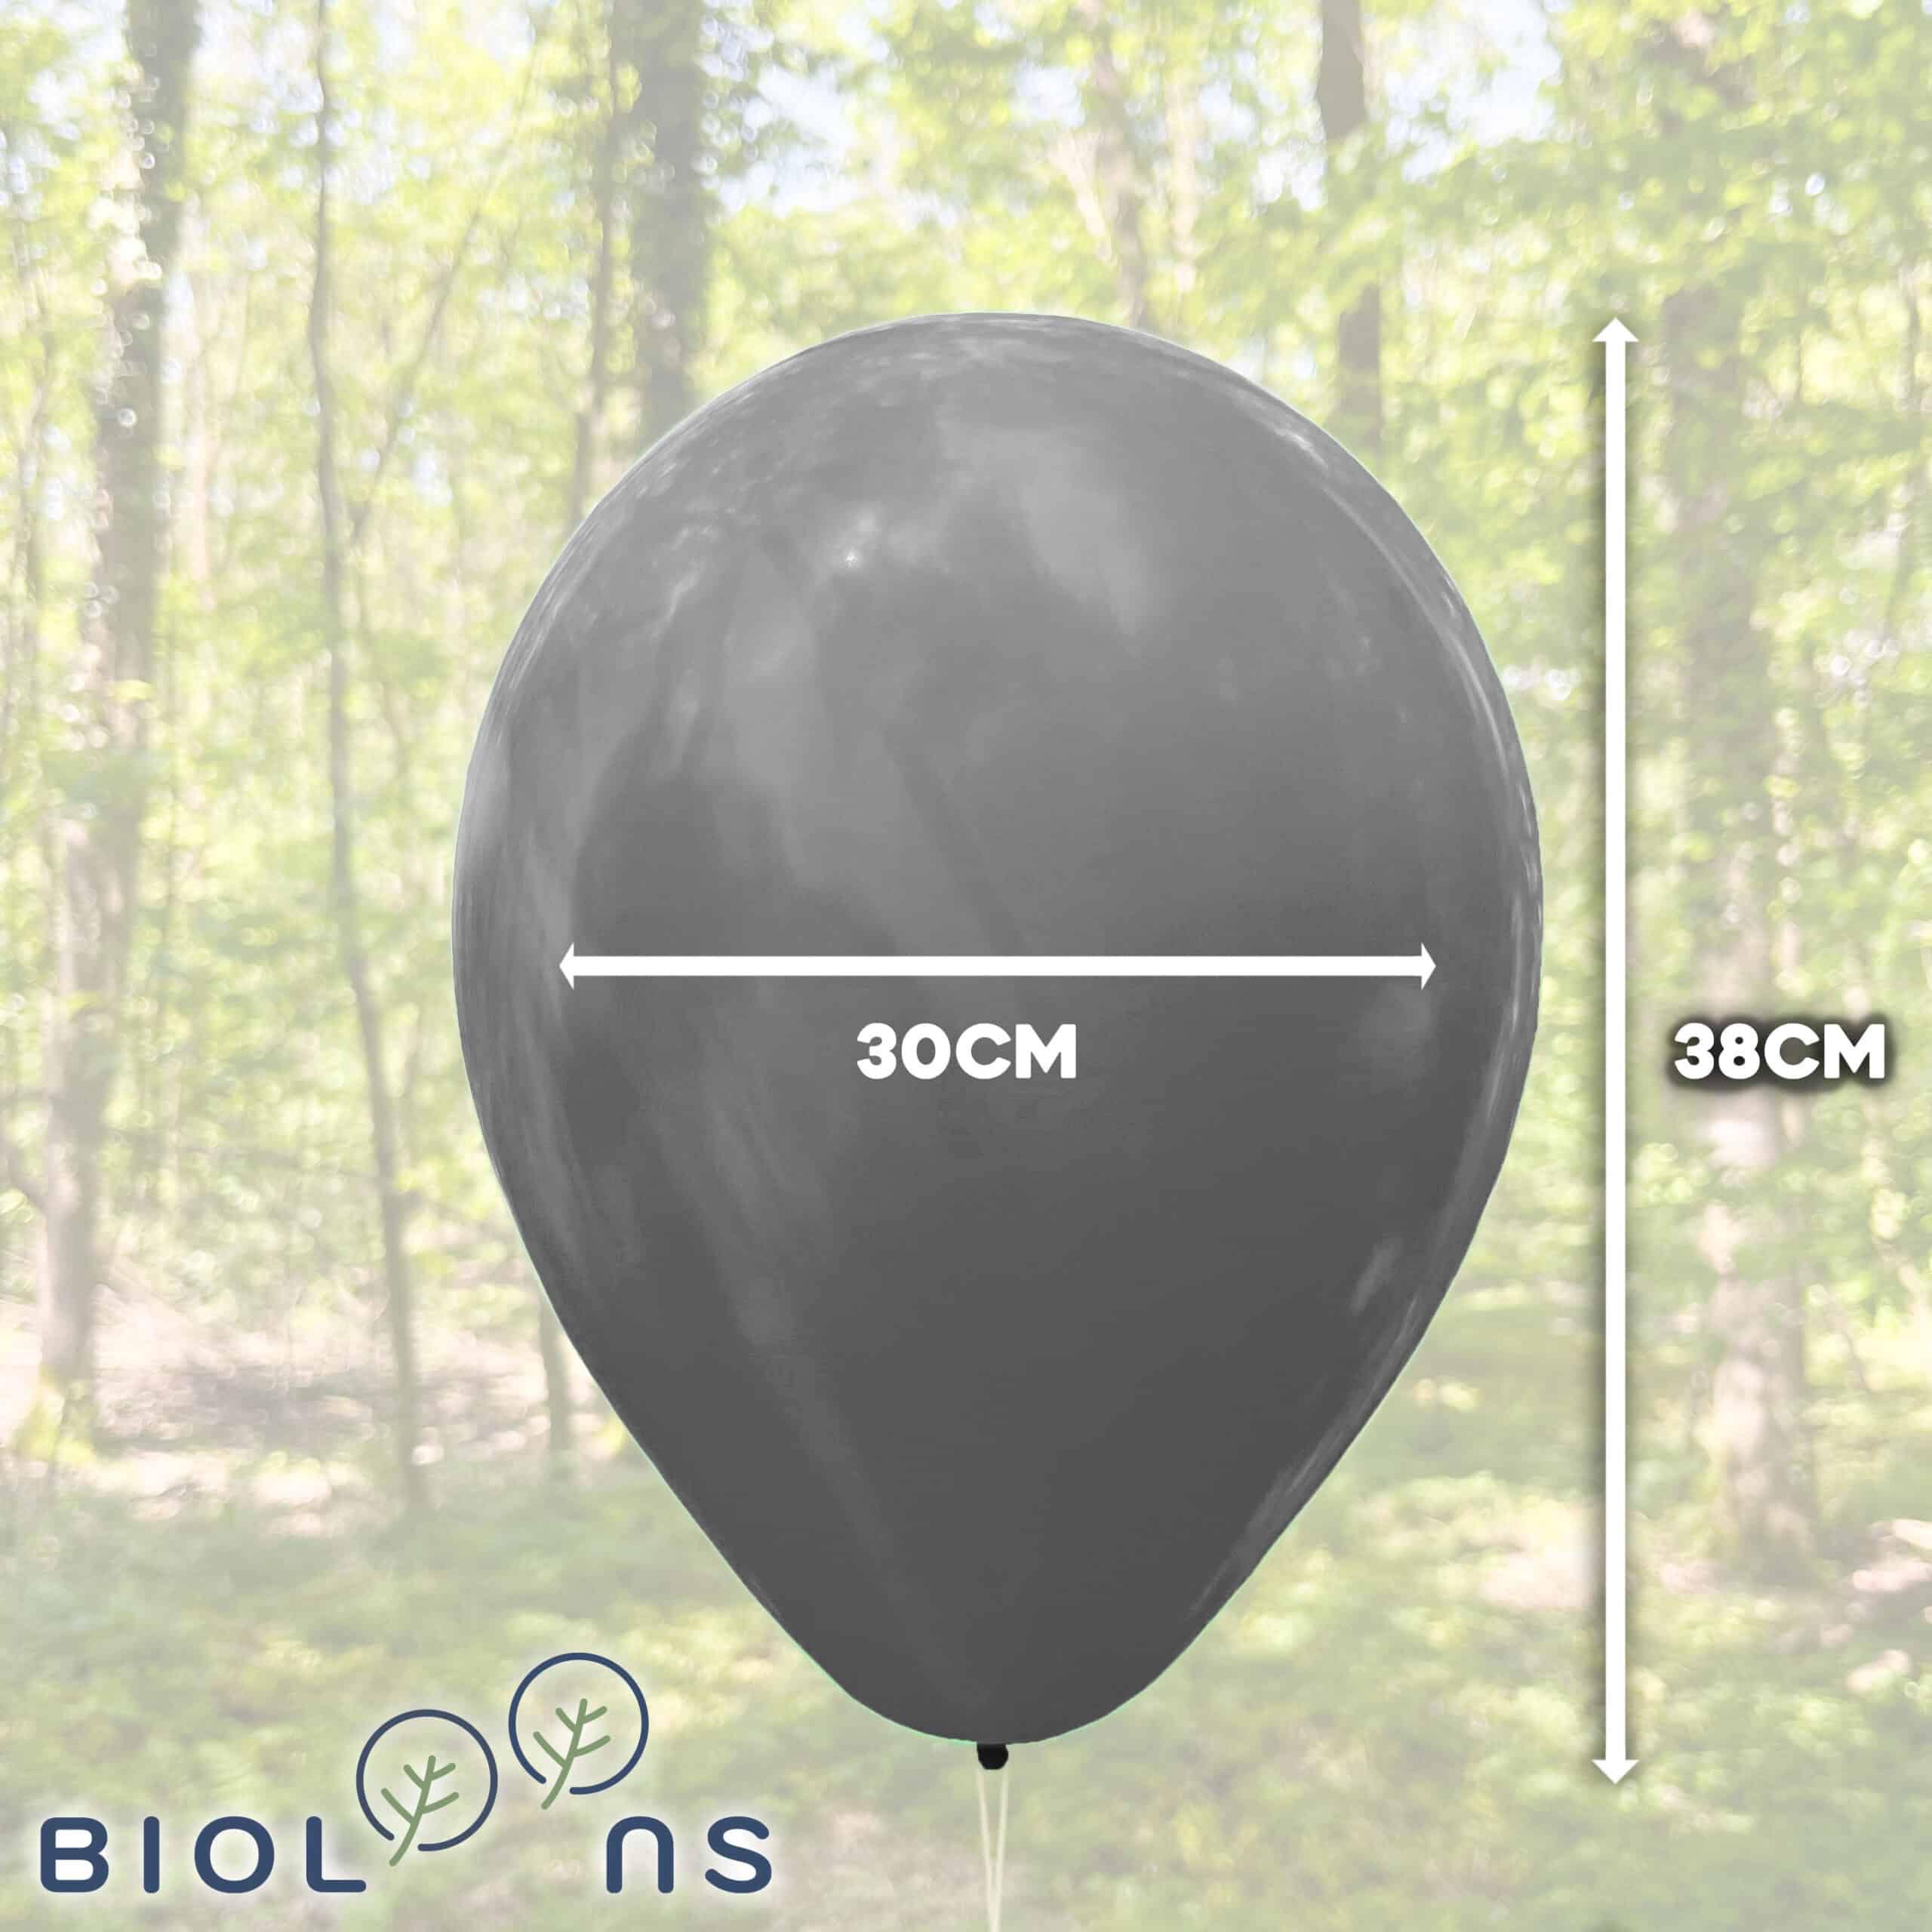 Bio Luftballon Bioloons® kristallklar mit hellblauem Graffiti, 30 cm - 25 Stück